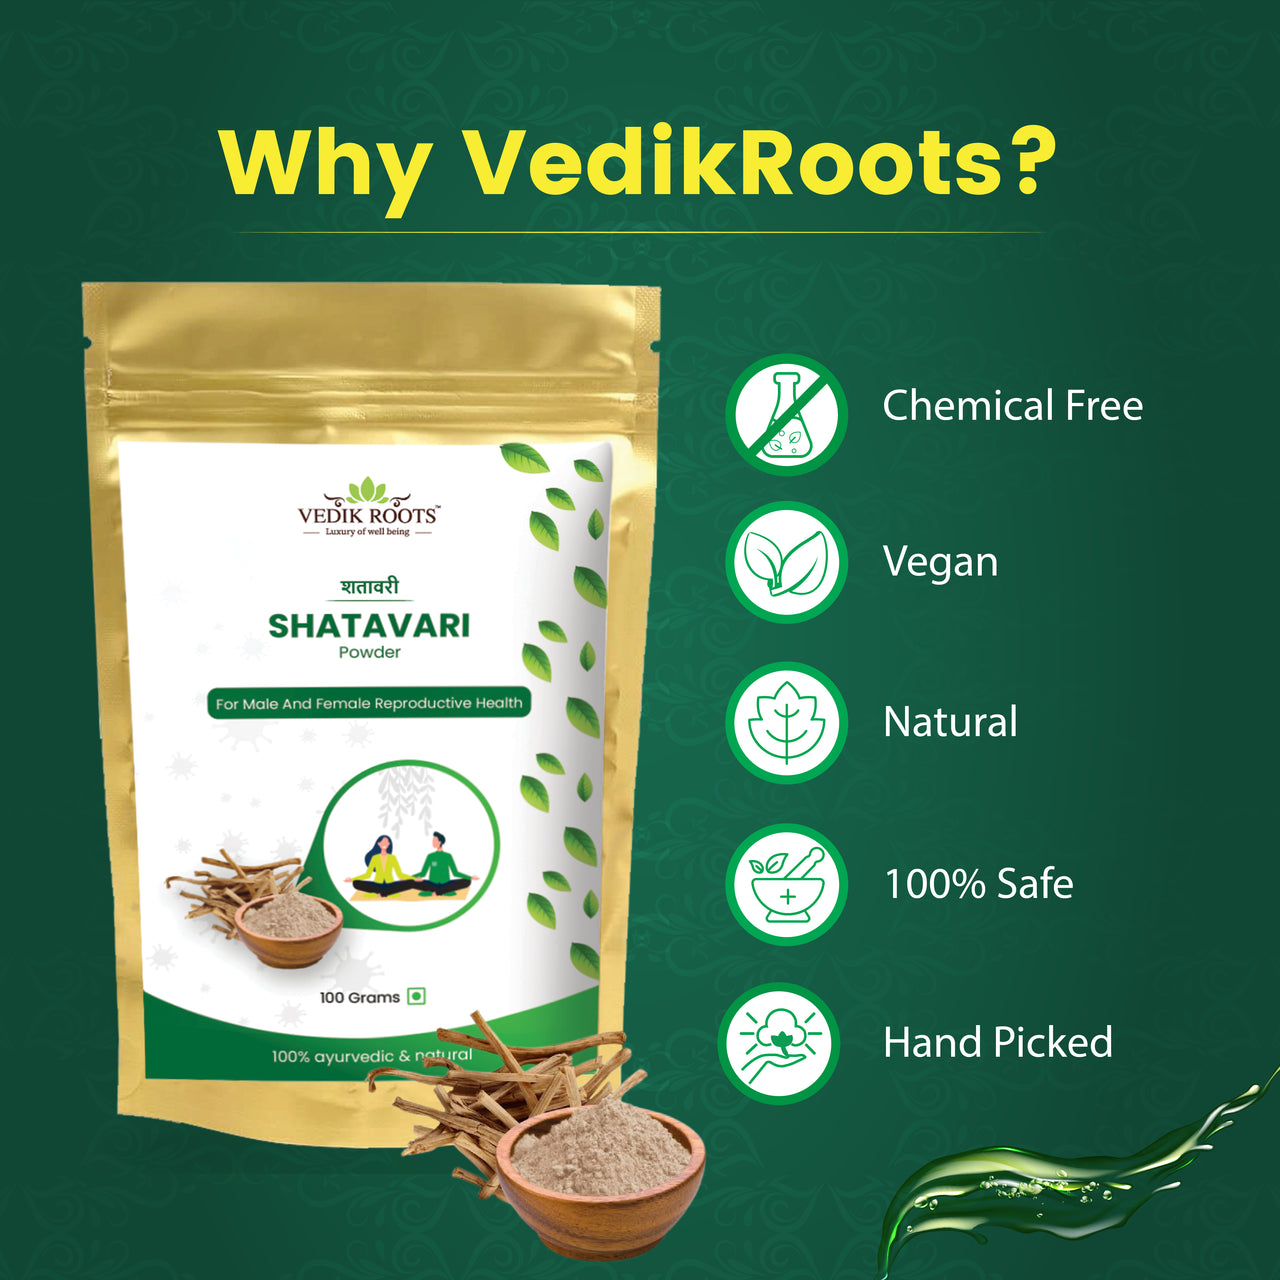 Pure Shatavari Powder: Chemical-Free, Vegan, Natural, Handpicked | Vedikroots Ayurveda